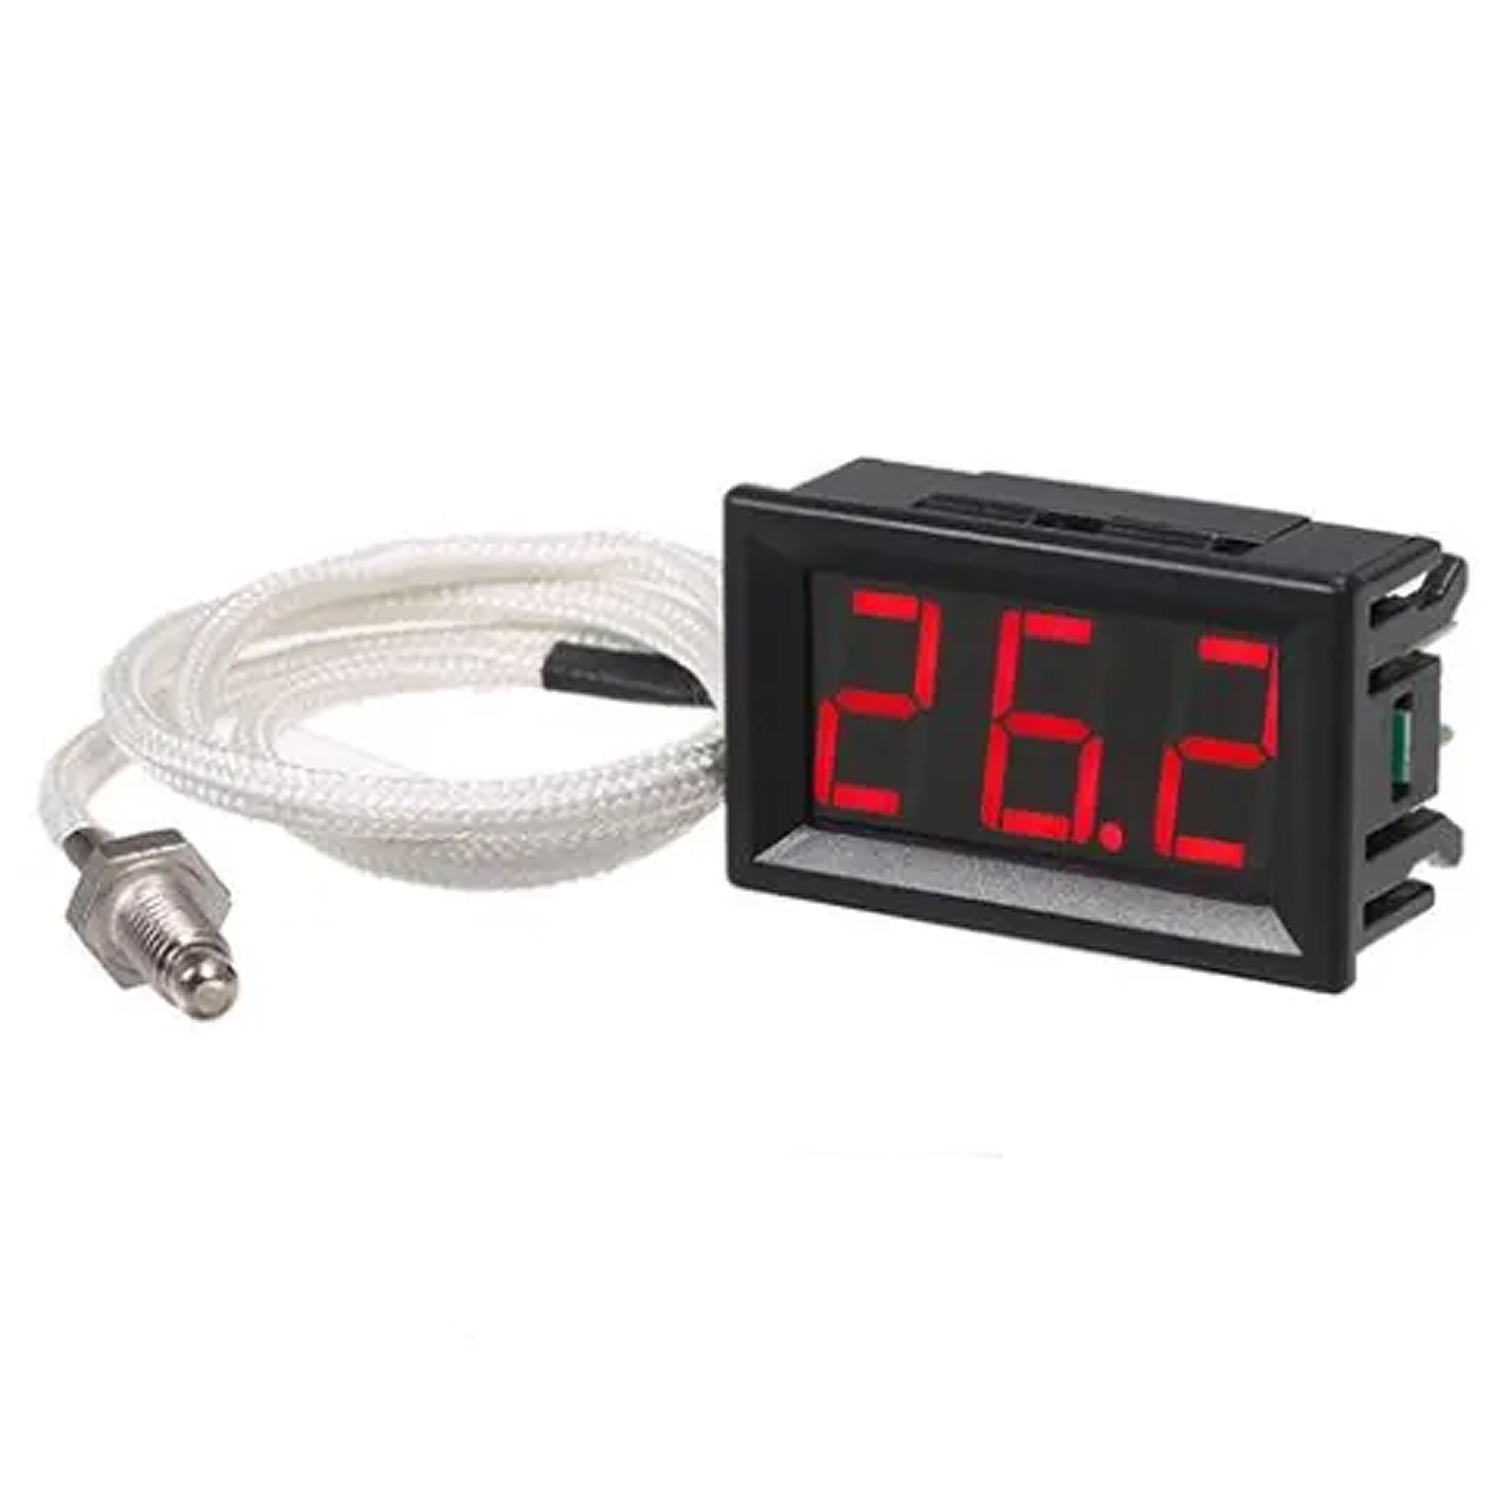 Термометр электронный XH-B310 термопара тип К от -30 до 800 °C красные цифры, фото